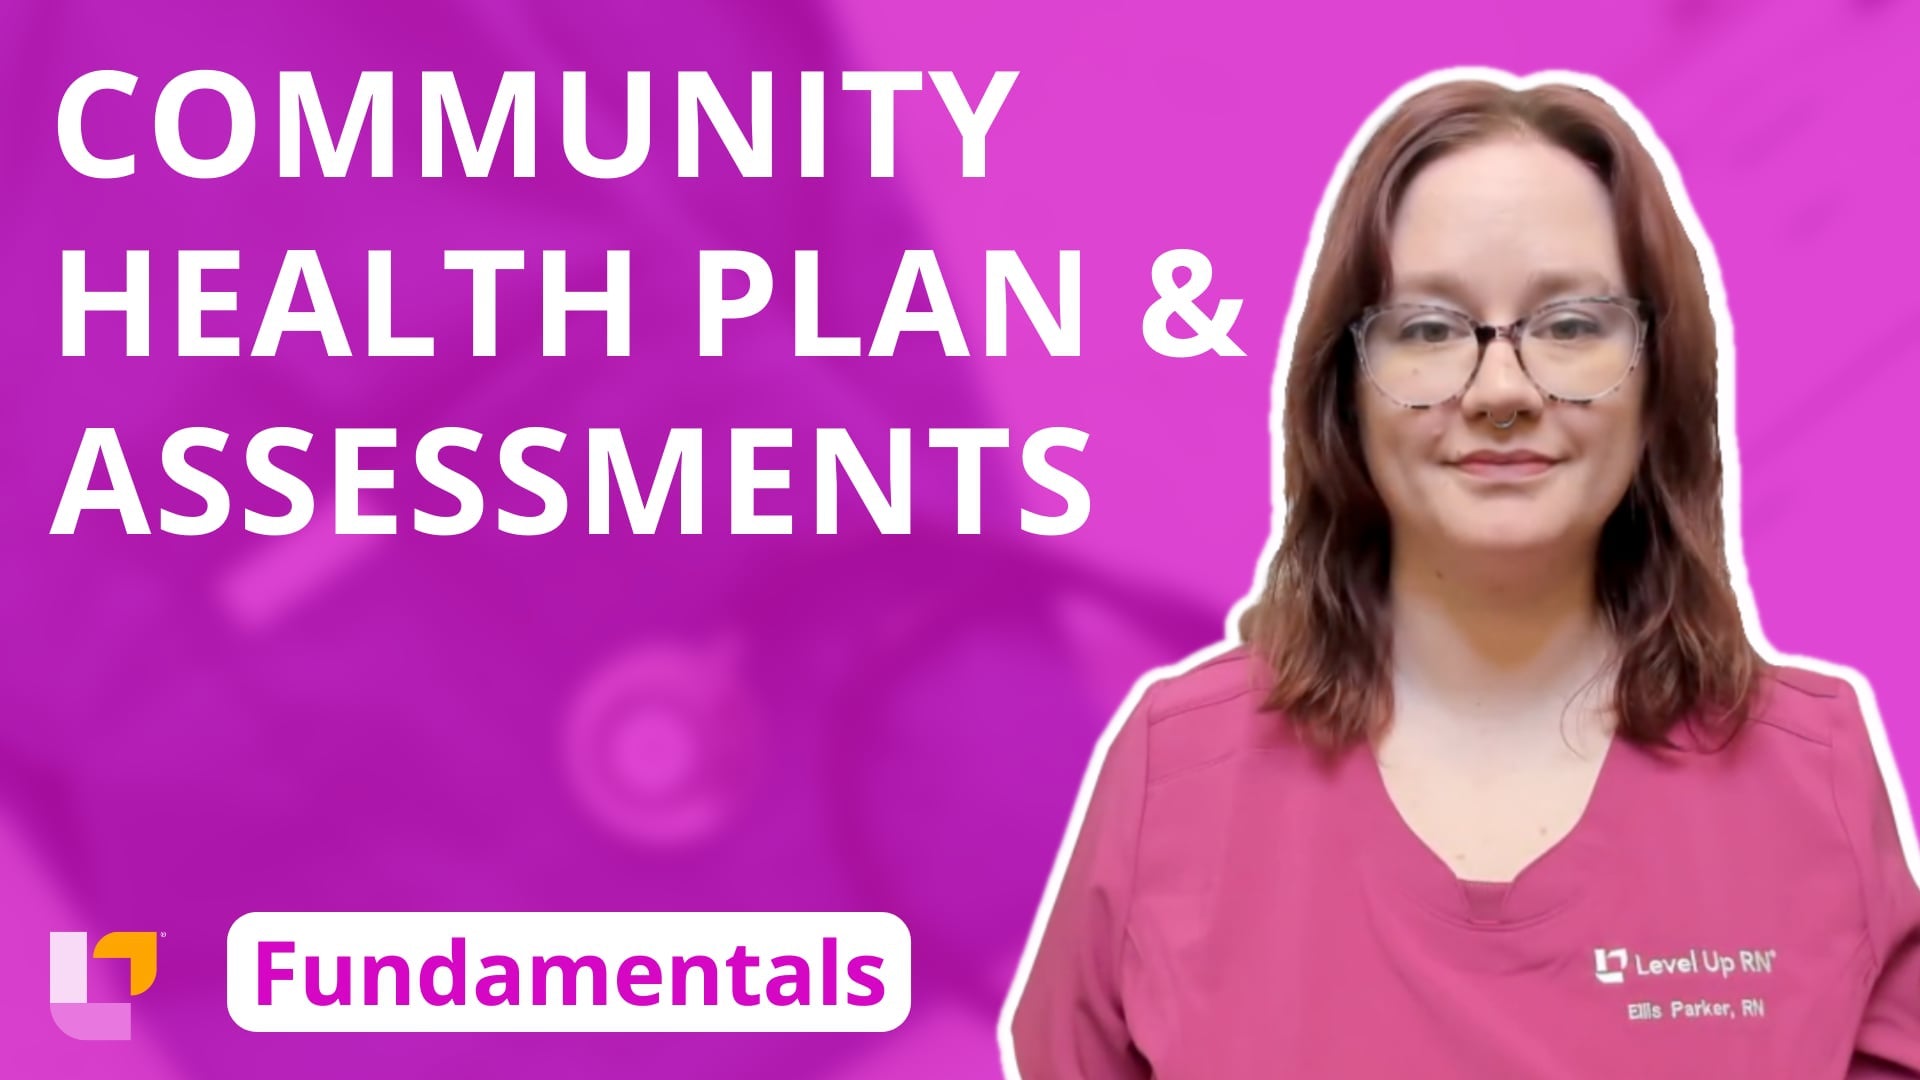 Fundamentals - Community Health, part 7: Community Health Plan and Assessments - LevelUpRN